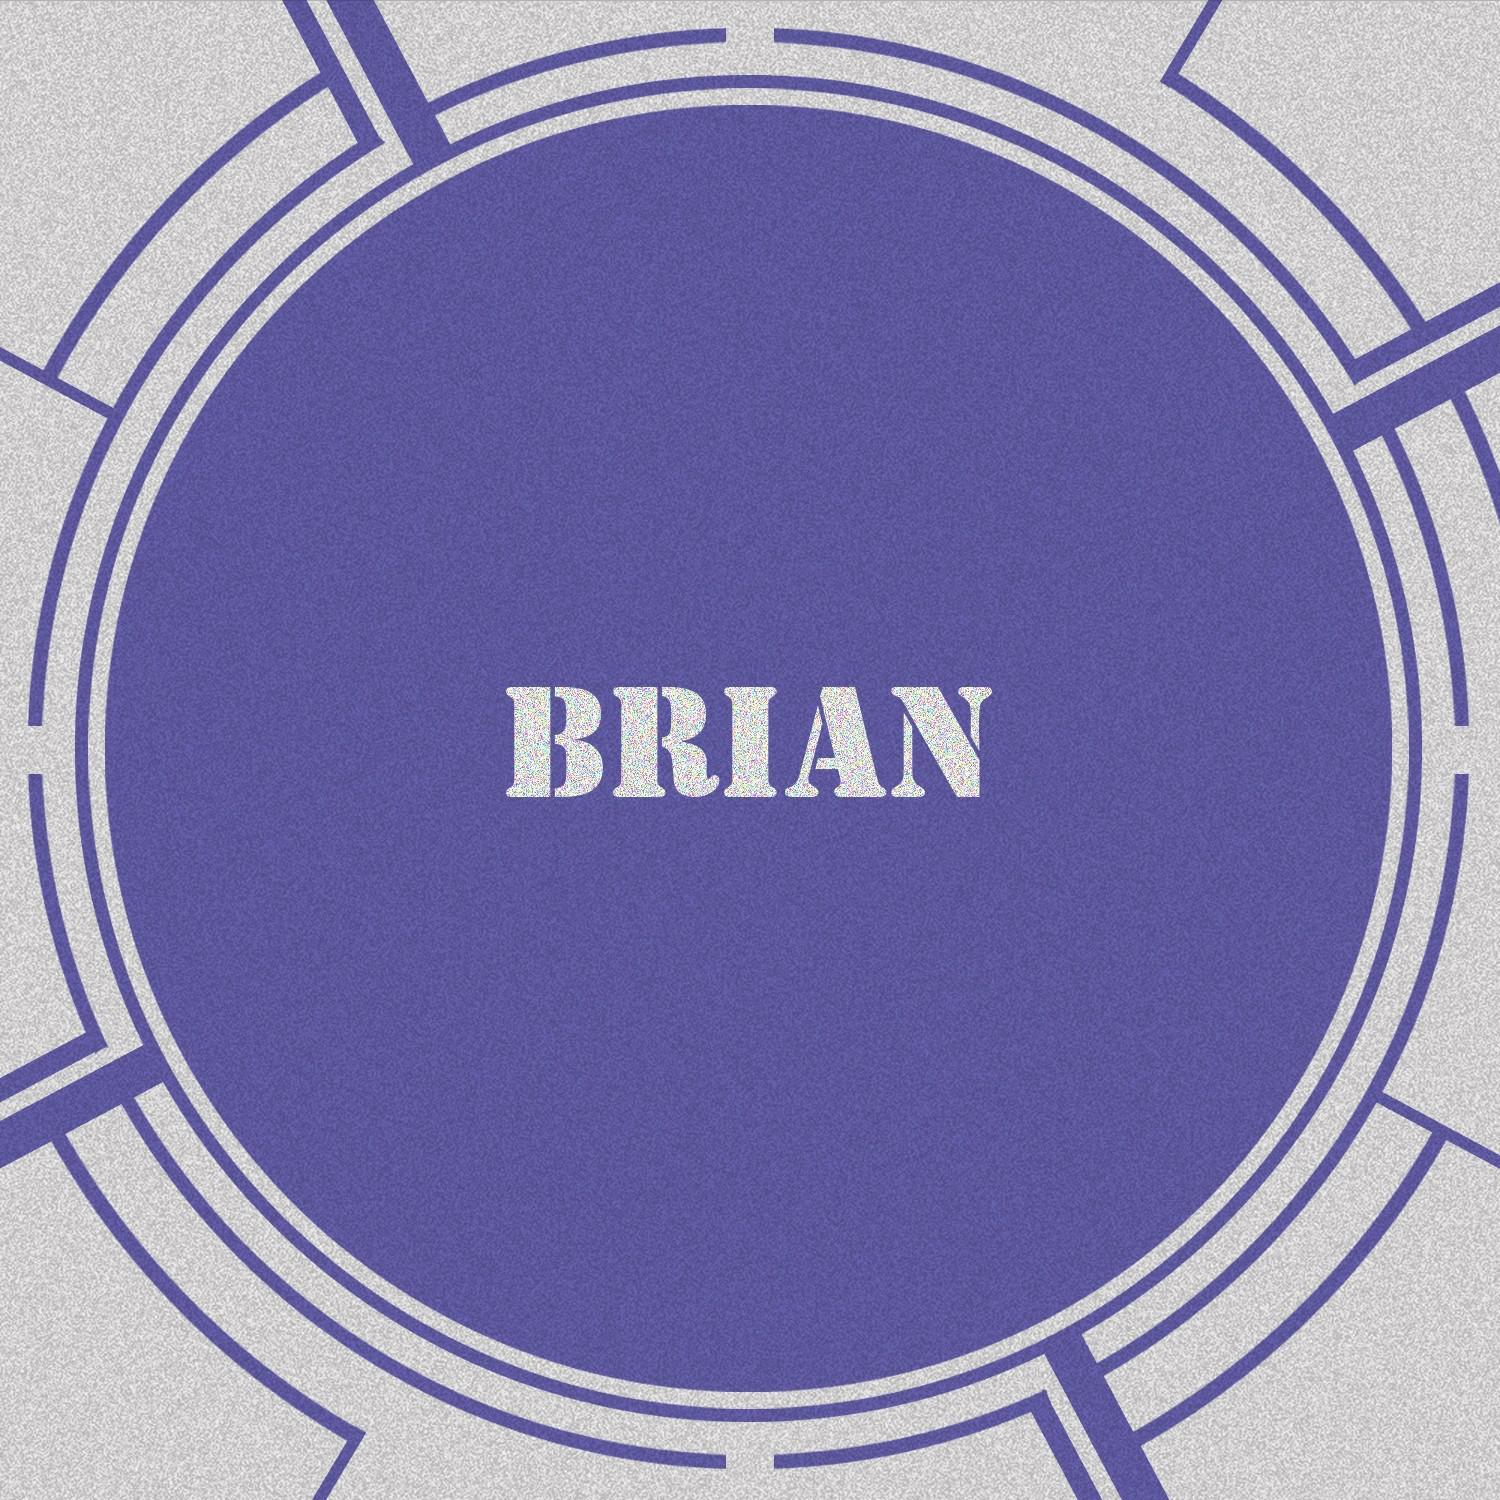 Brian - The Sinner